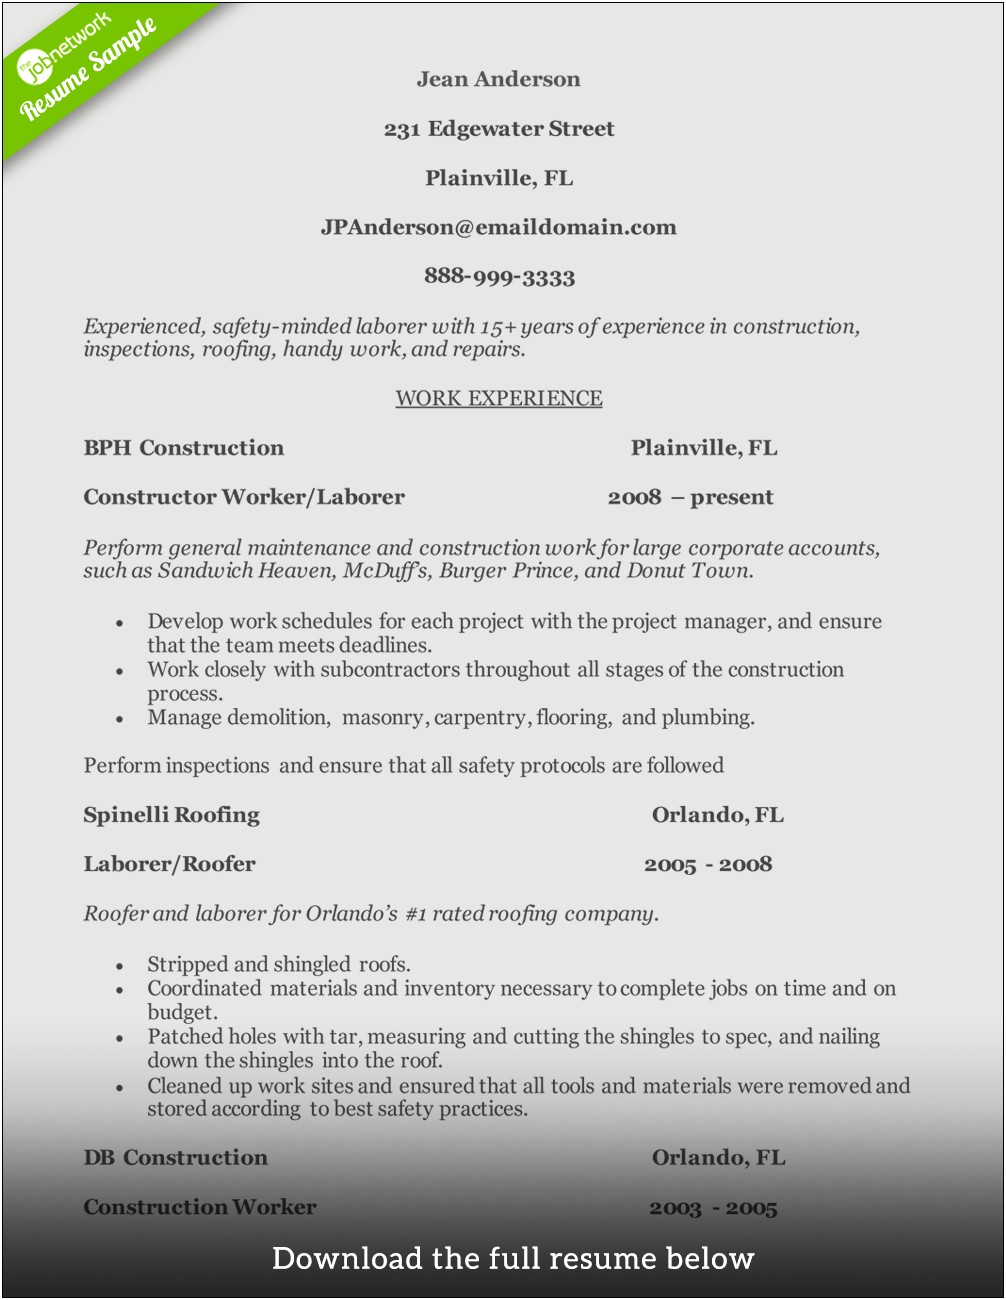 Sample Resume For General Construction Worker